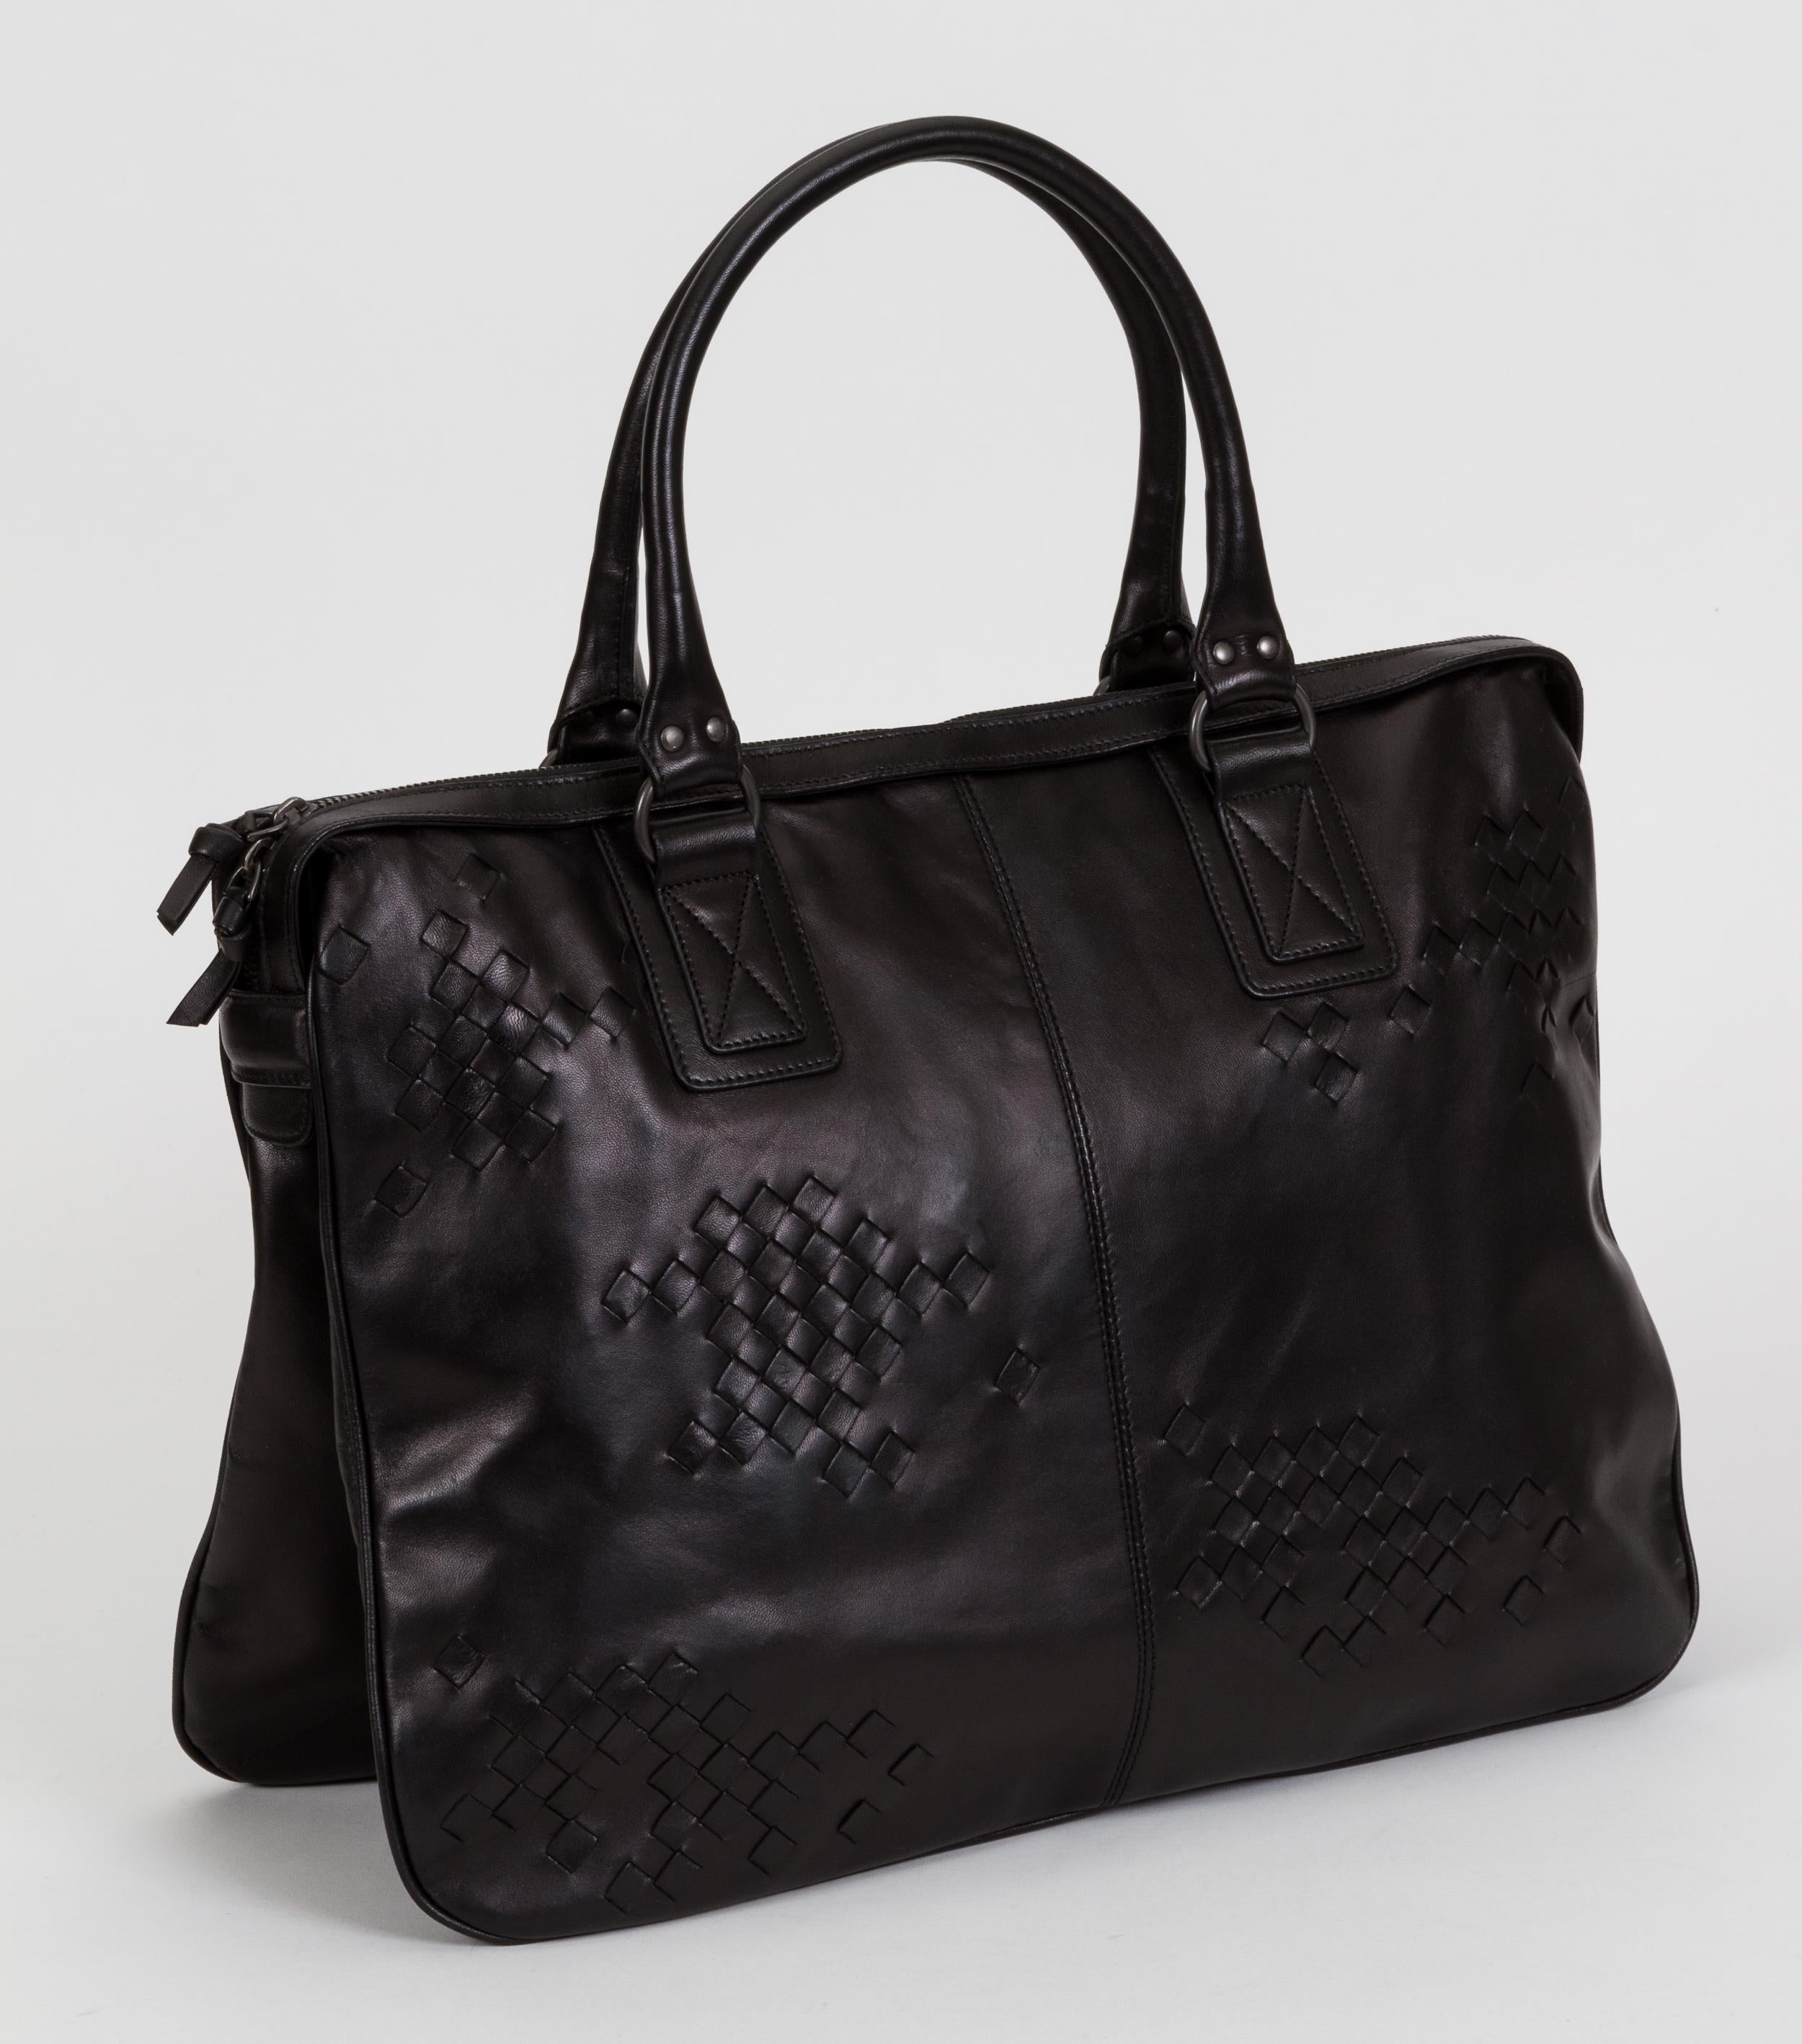 Bottega Veneta smooth and intrecciato combination black leather handbag. Spacious with two interior compartments plus a center zipped one. Tan suede interior. Handle drop, 7.5